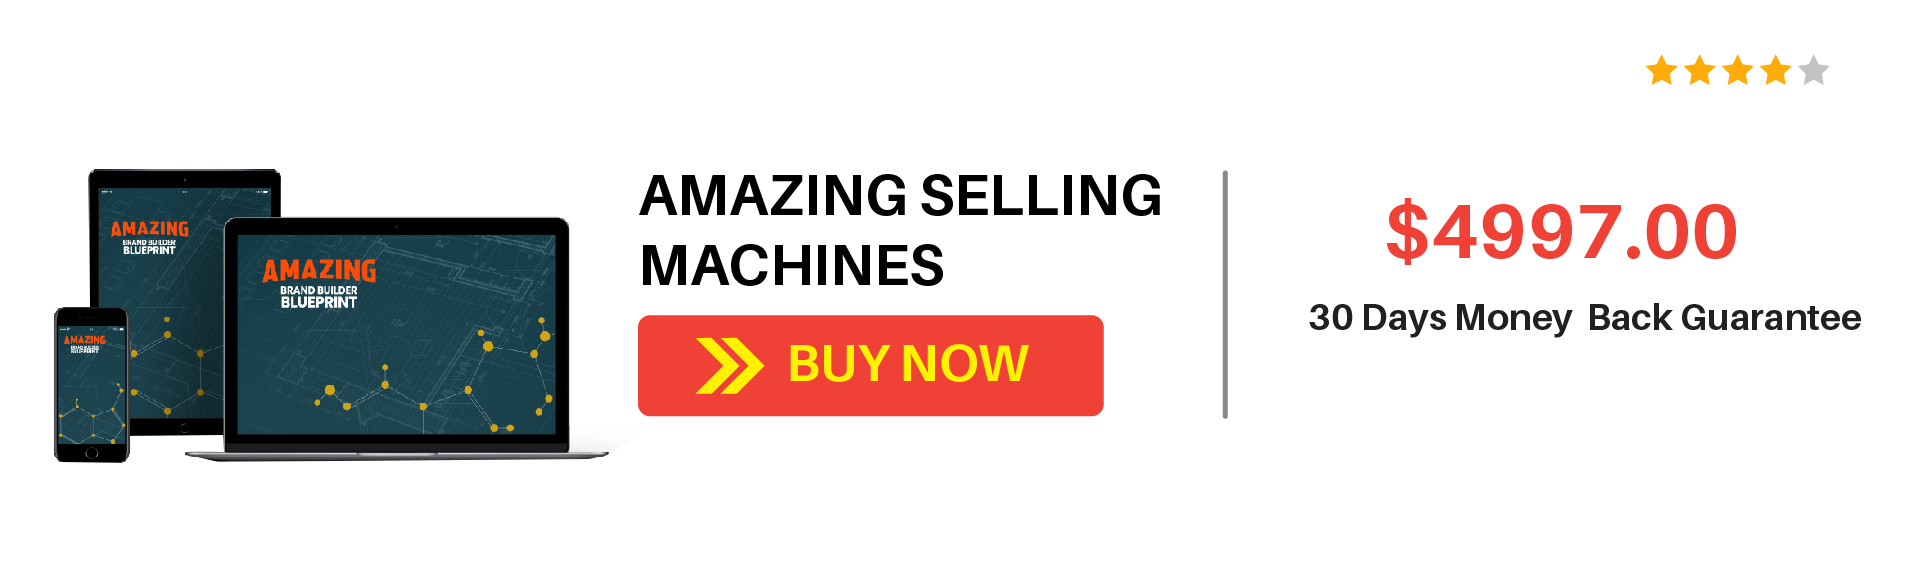 Amazing Selling Machines priceAmazing Selling Machines price